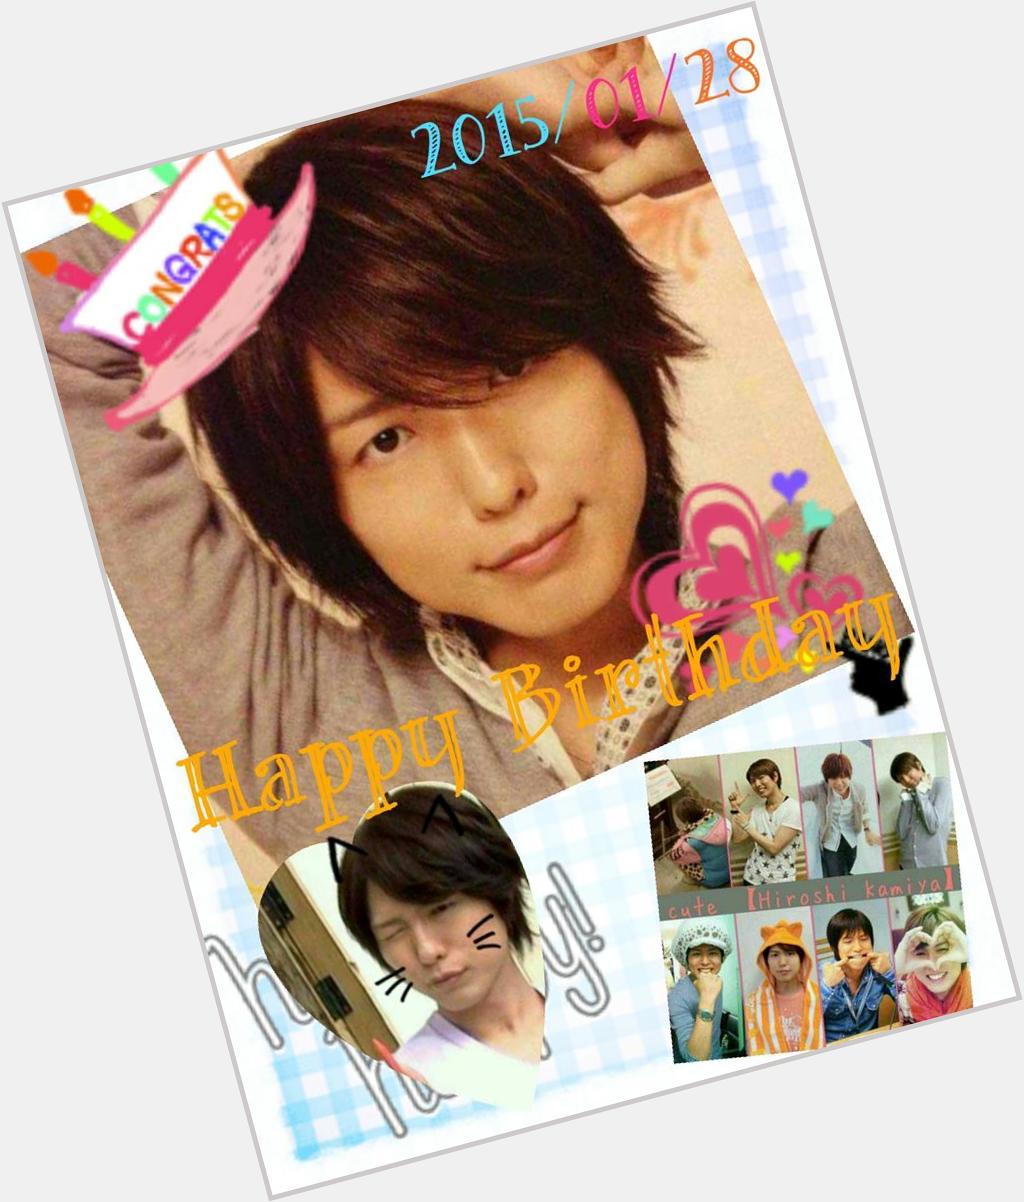            Happy Birthday Hiroshi Kamiya
(*\ \)/  :*   *:   (\ \*) 